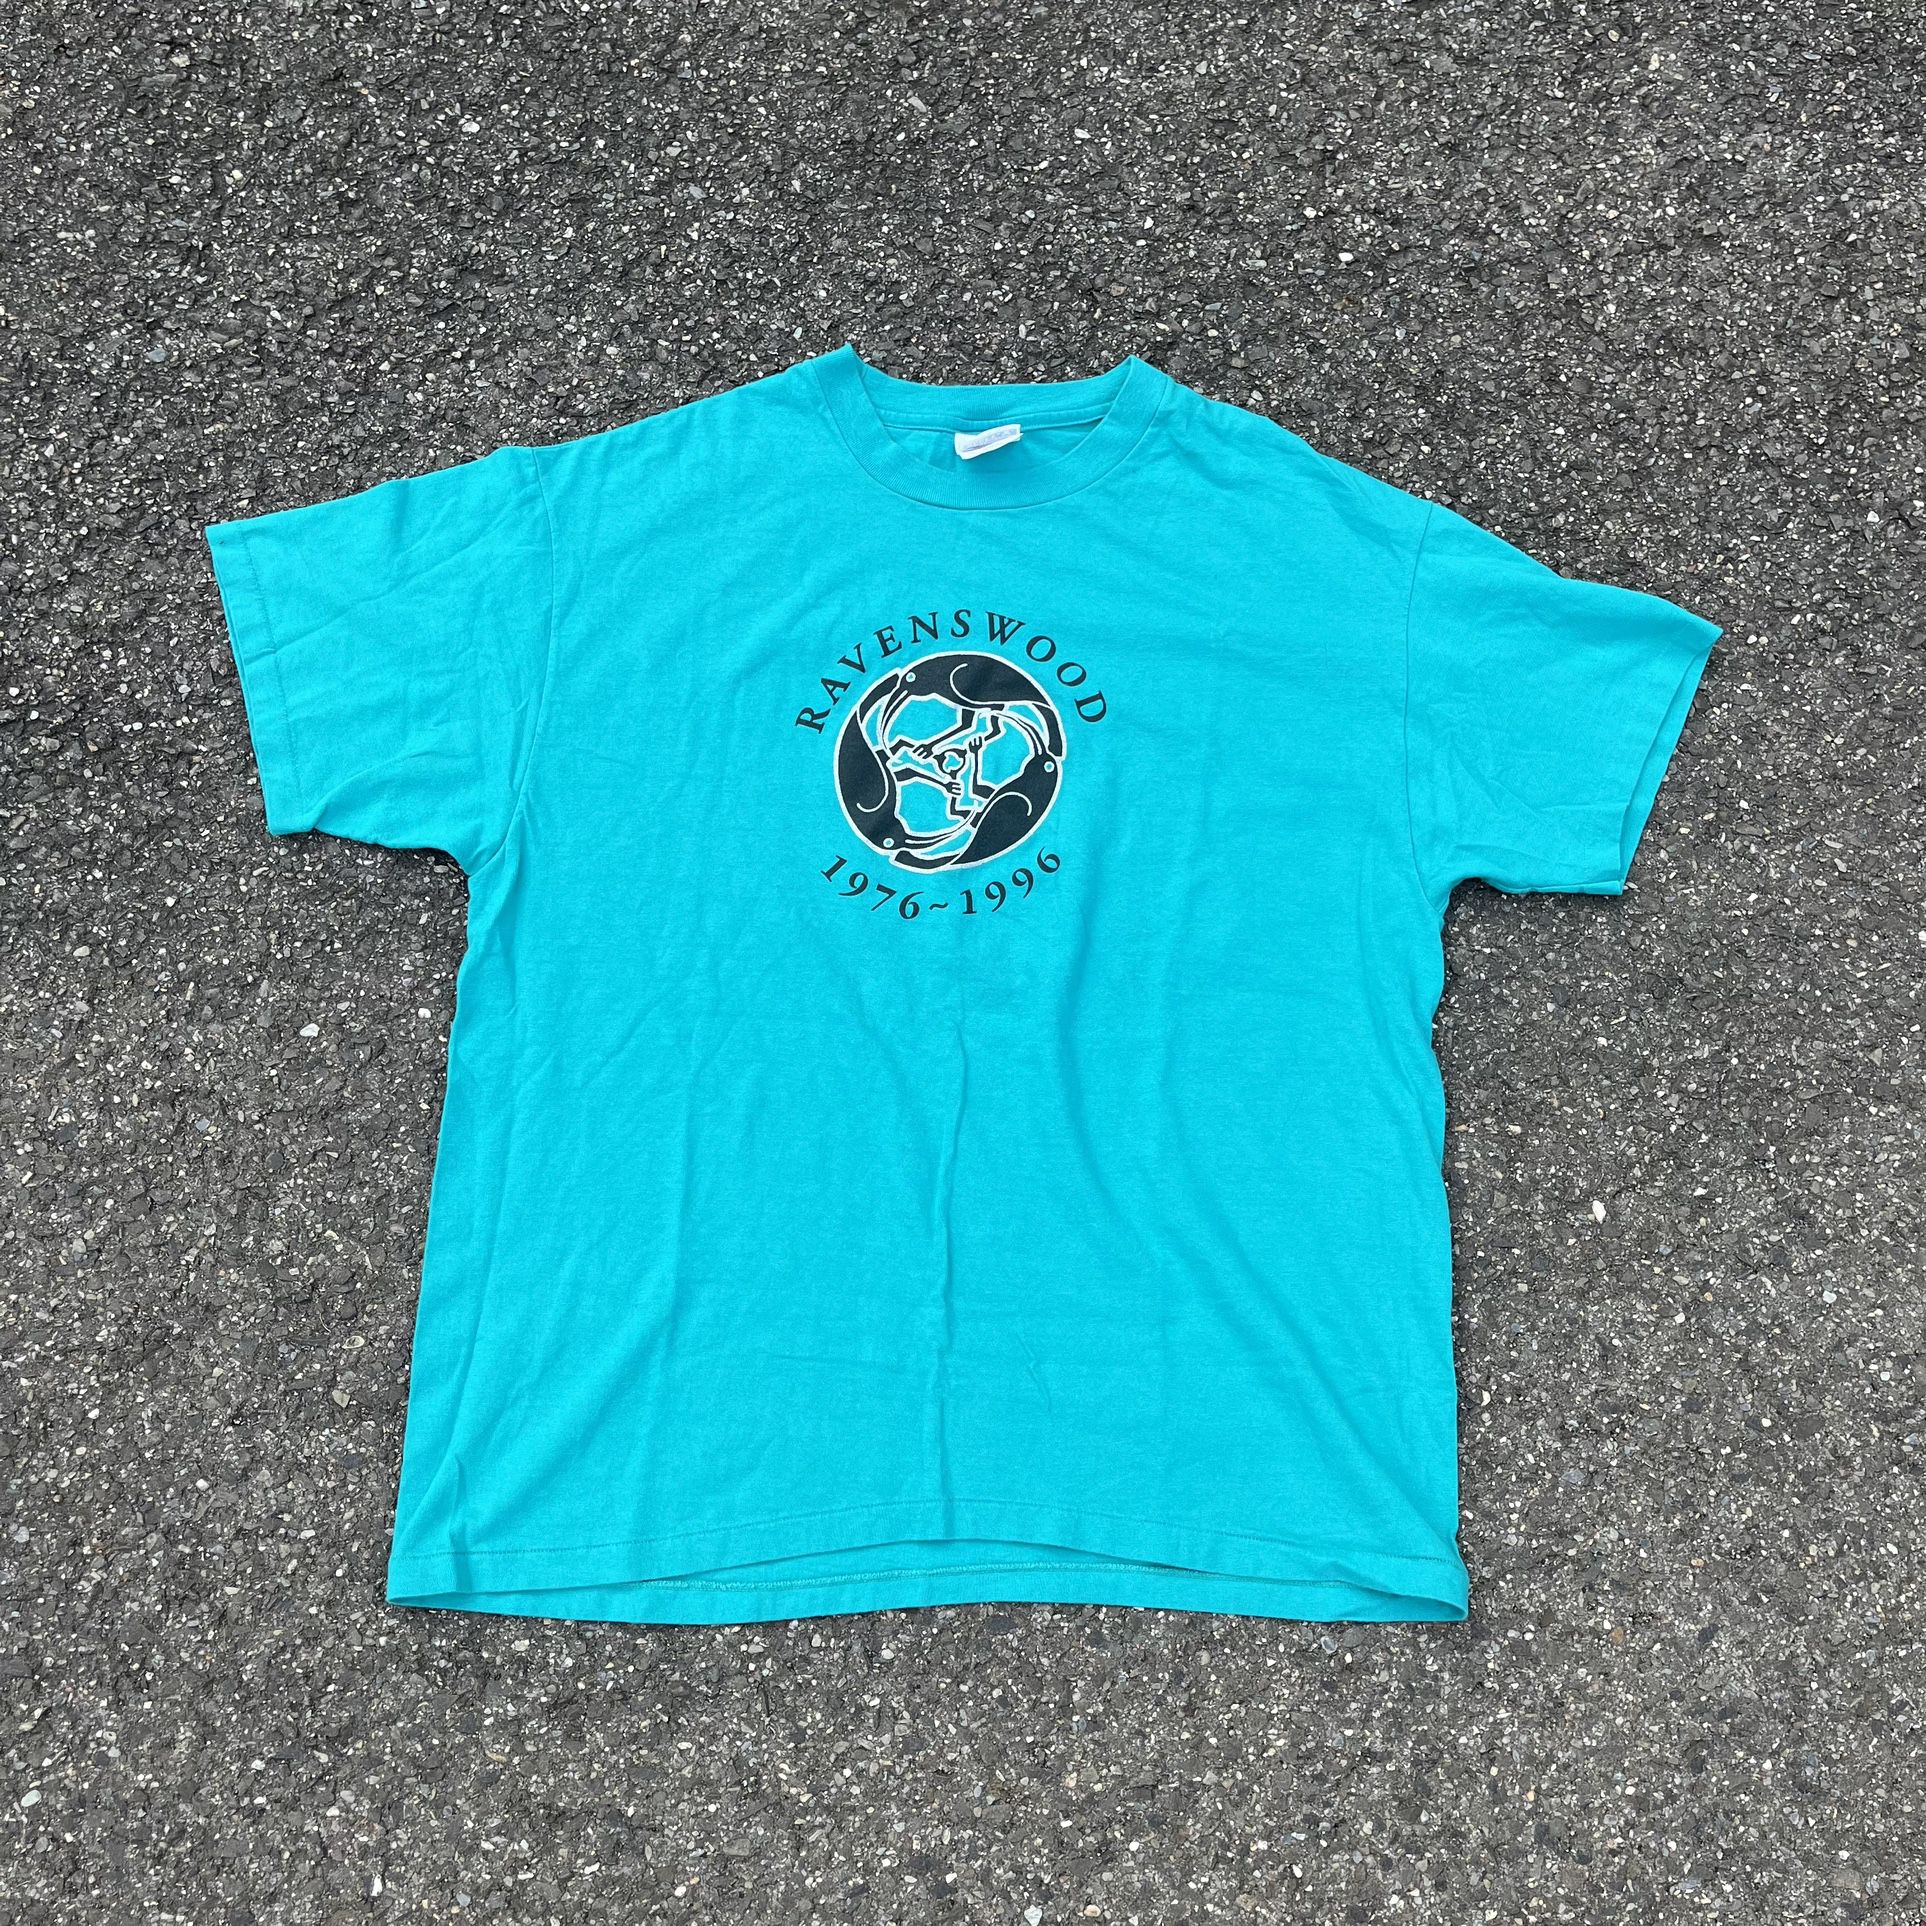 1996 20th Anniversary Ravenswood Graphic T Shirt